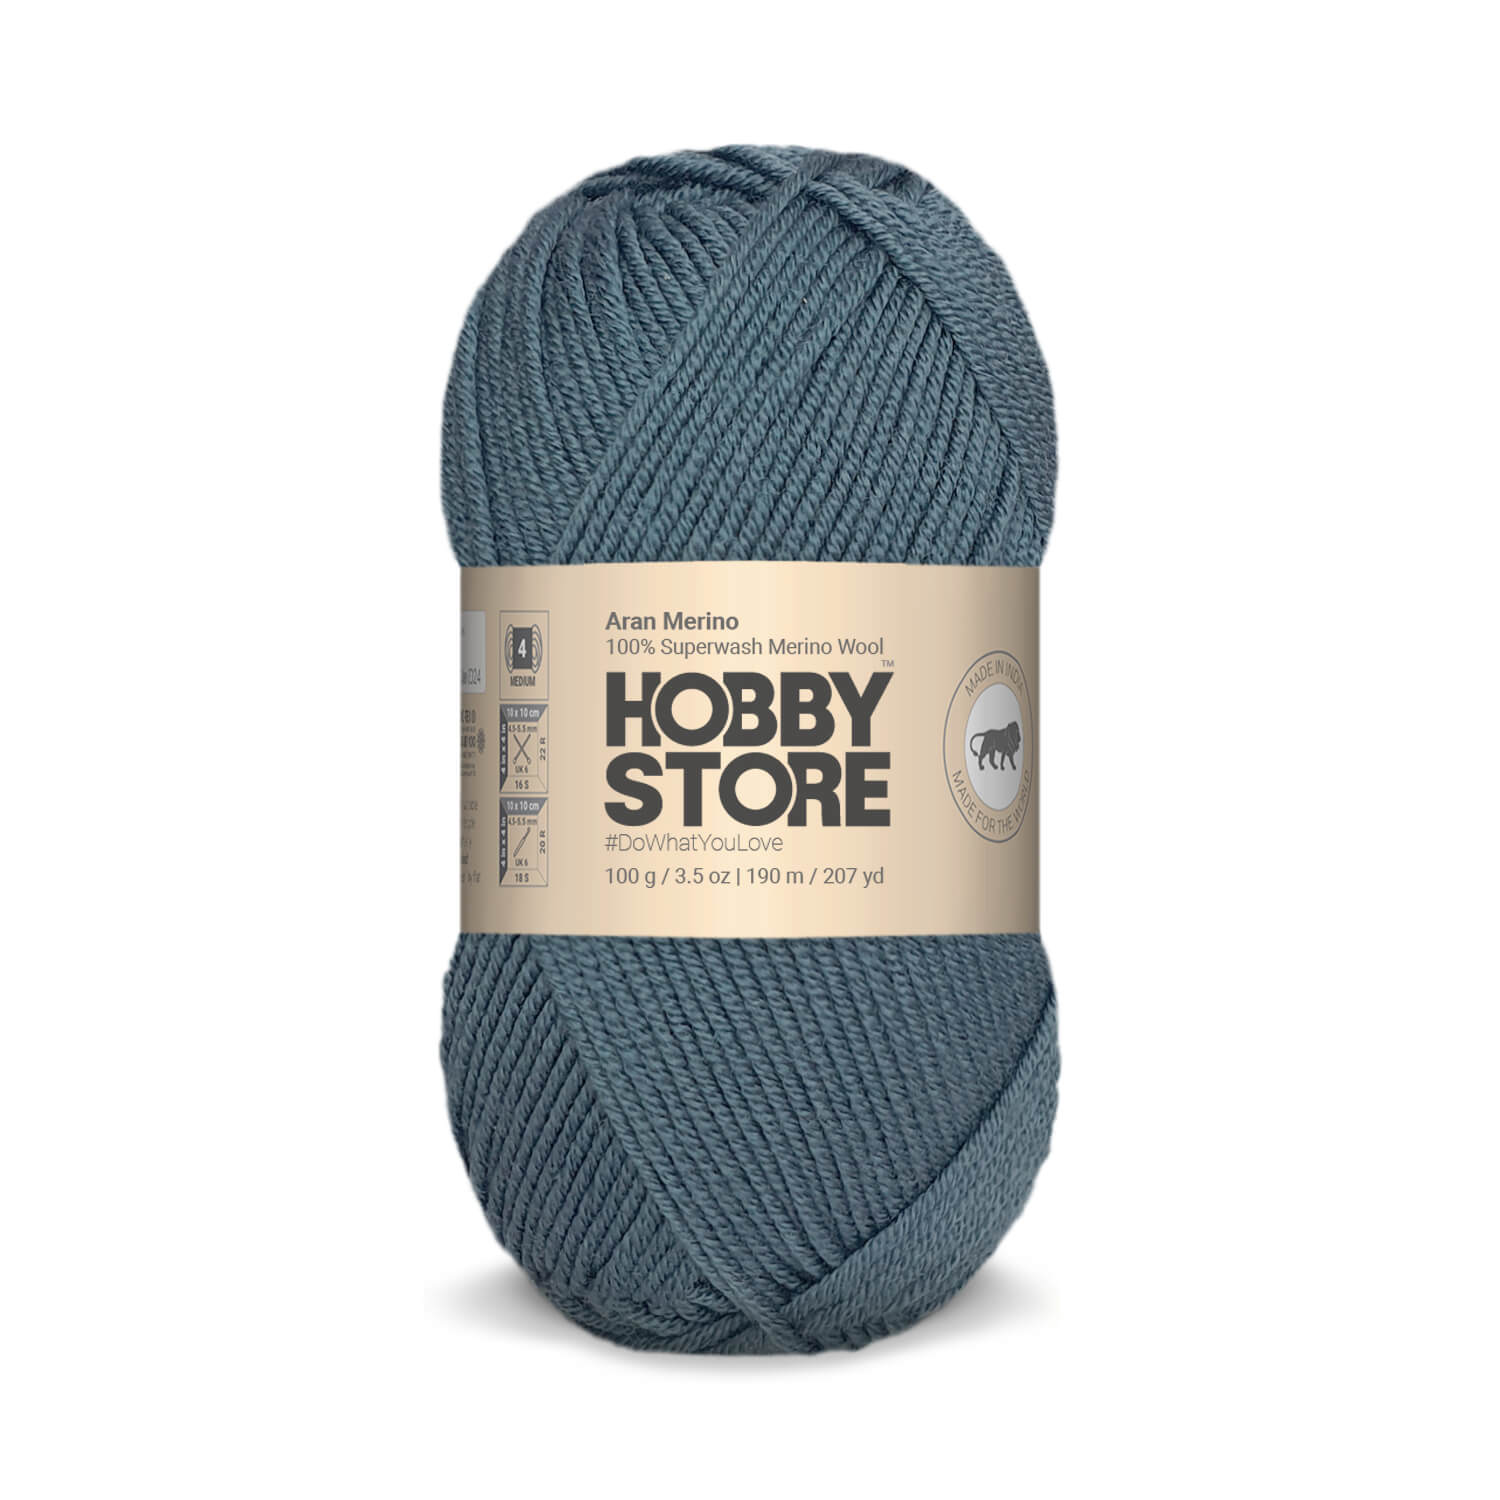 Aran Merino Wool by Hobby Store - Storm Blue AM008